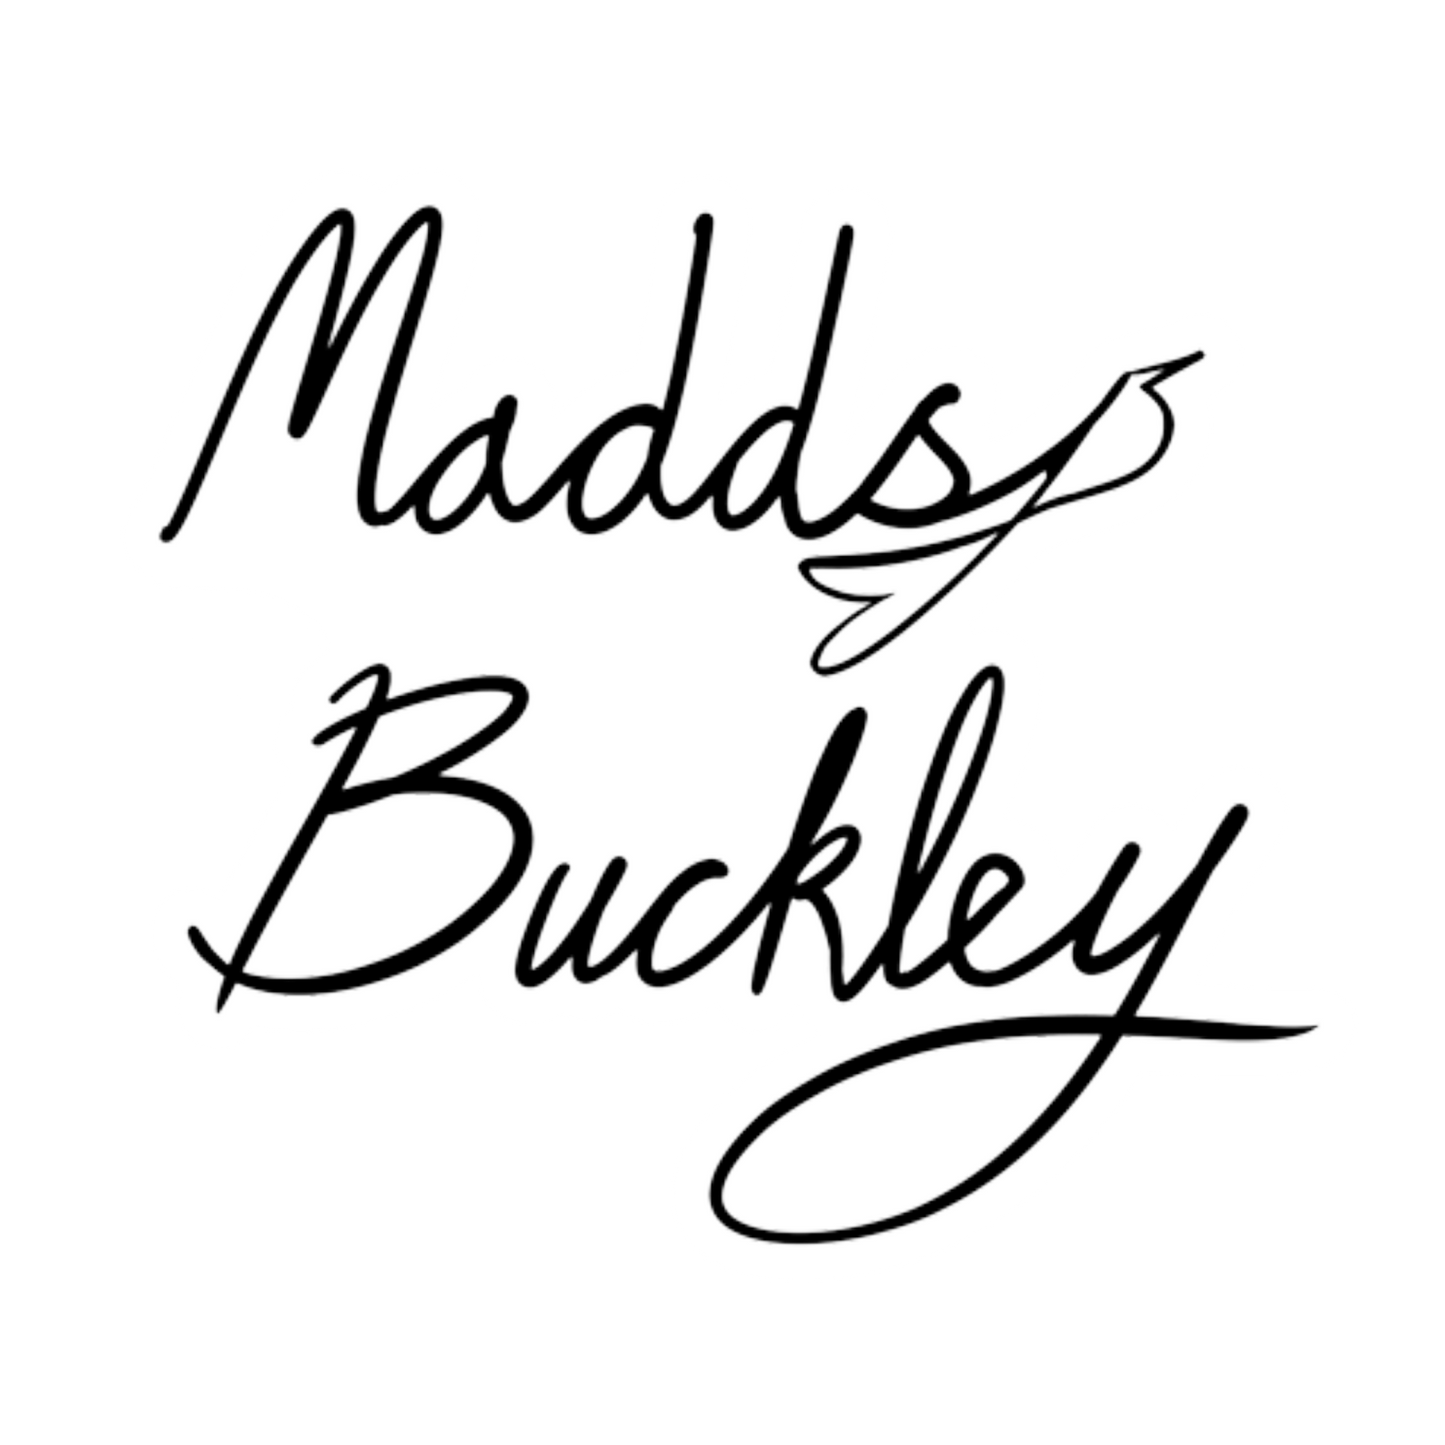 Madds Buckley Logo Sticker